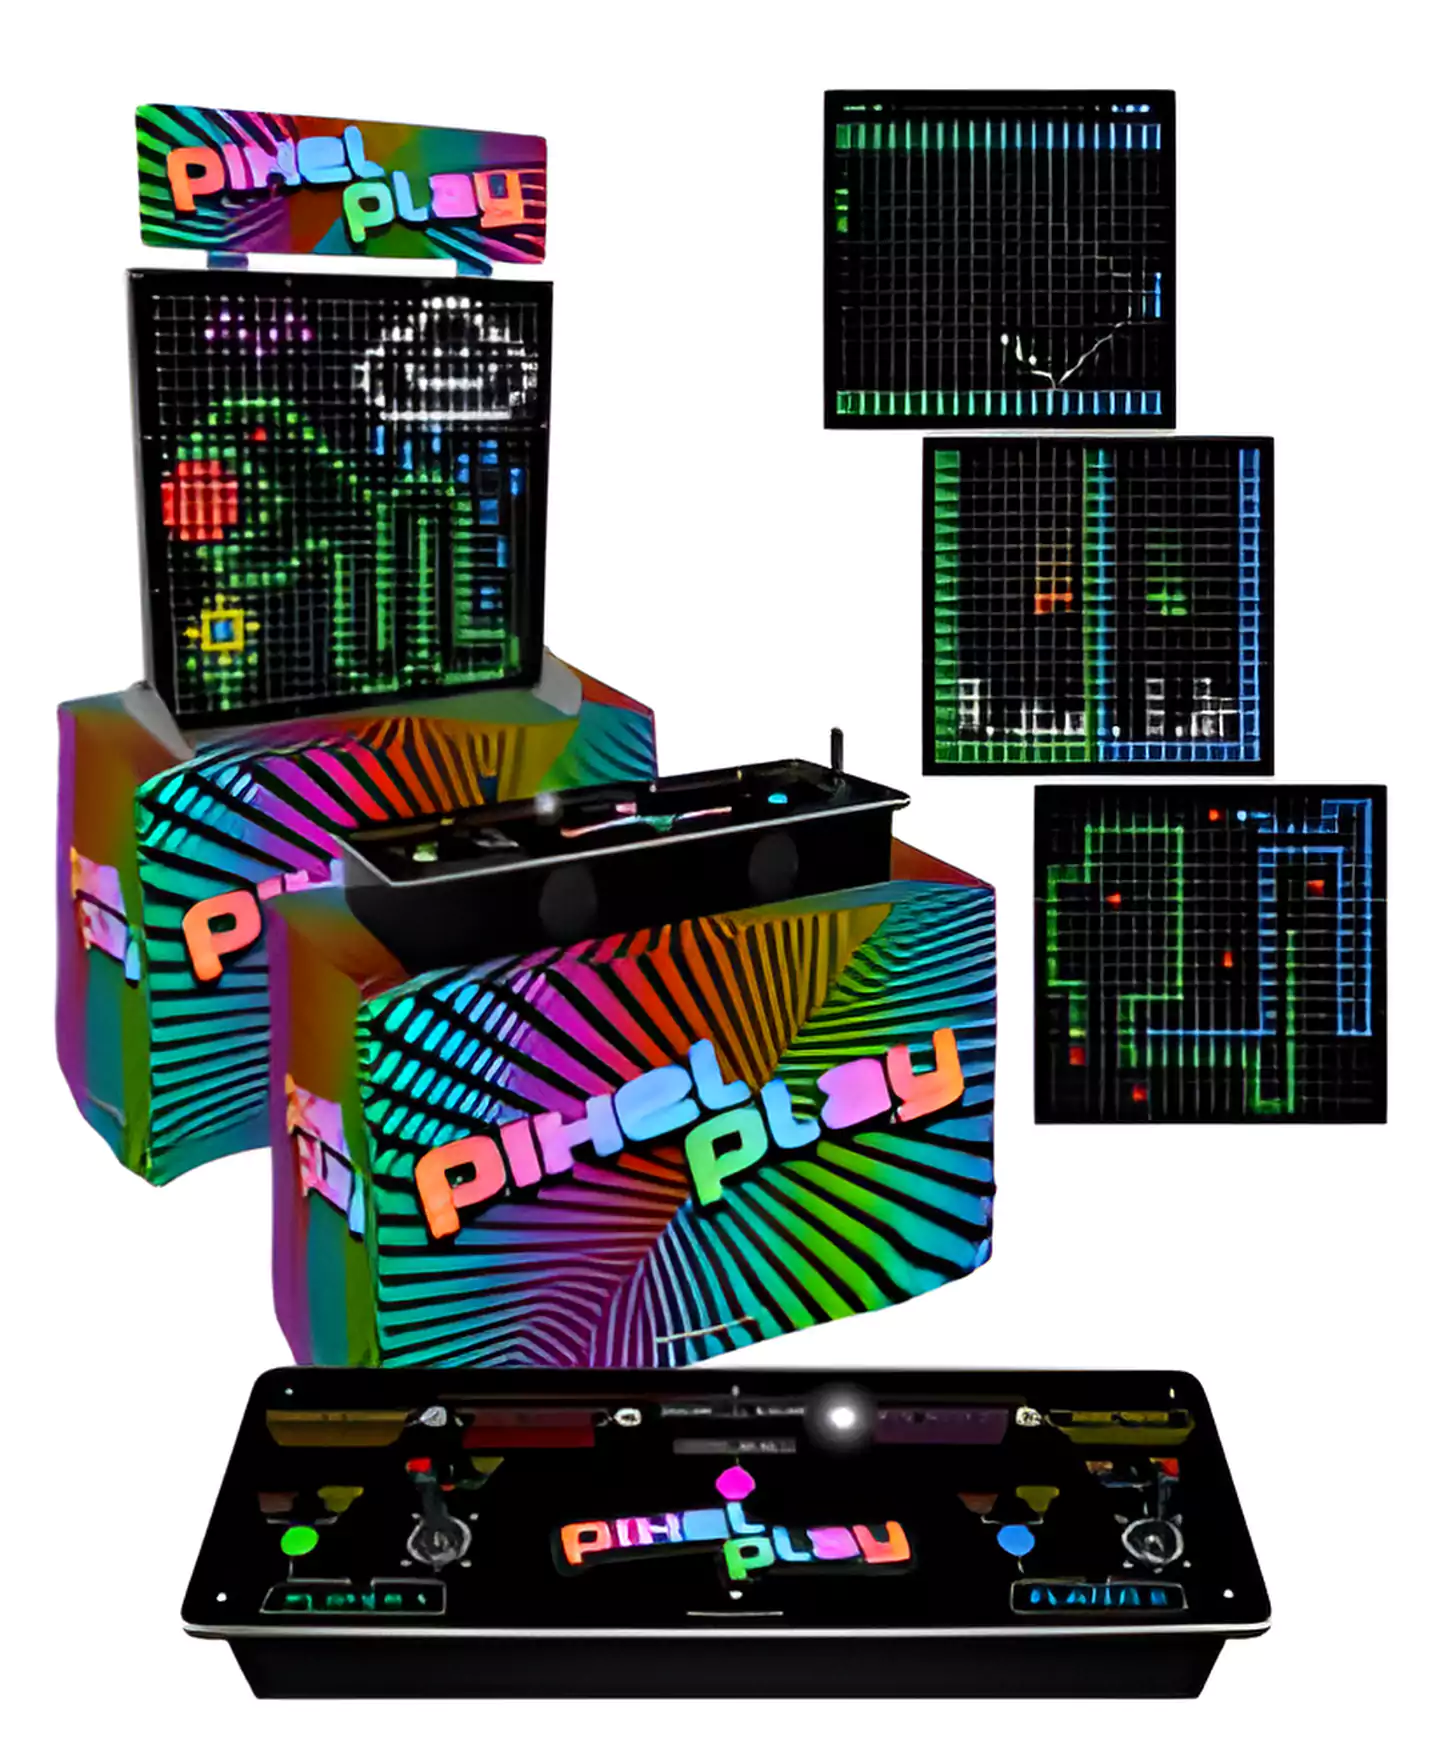 Pixel Play Arcade Game